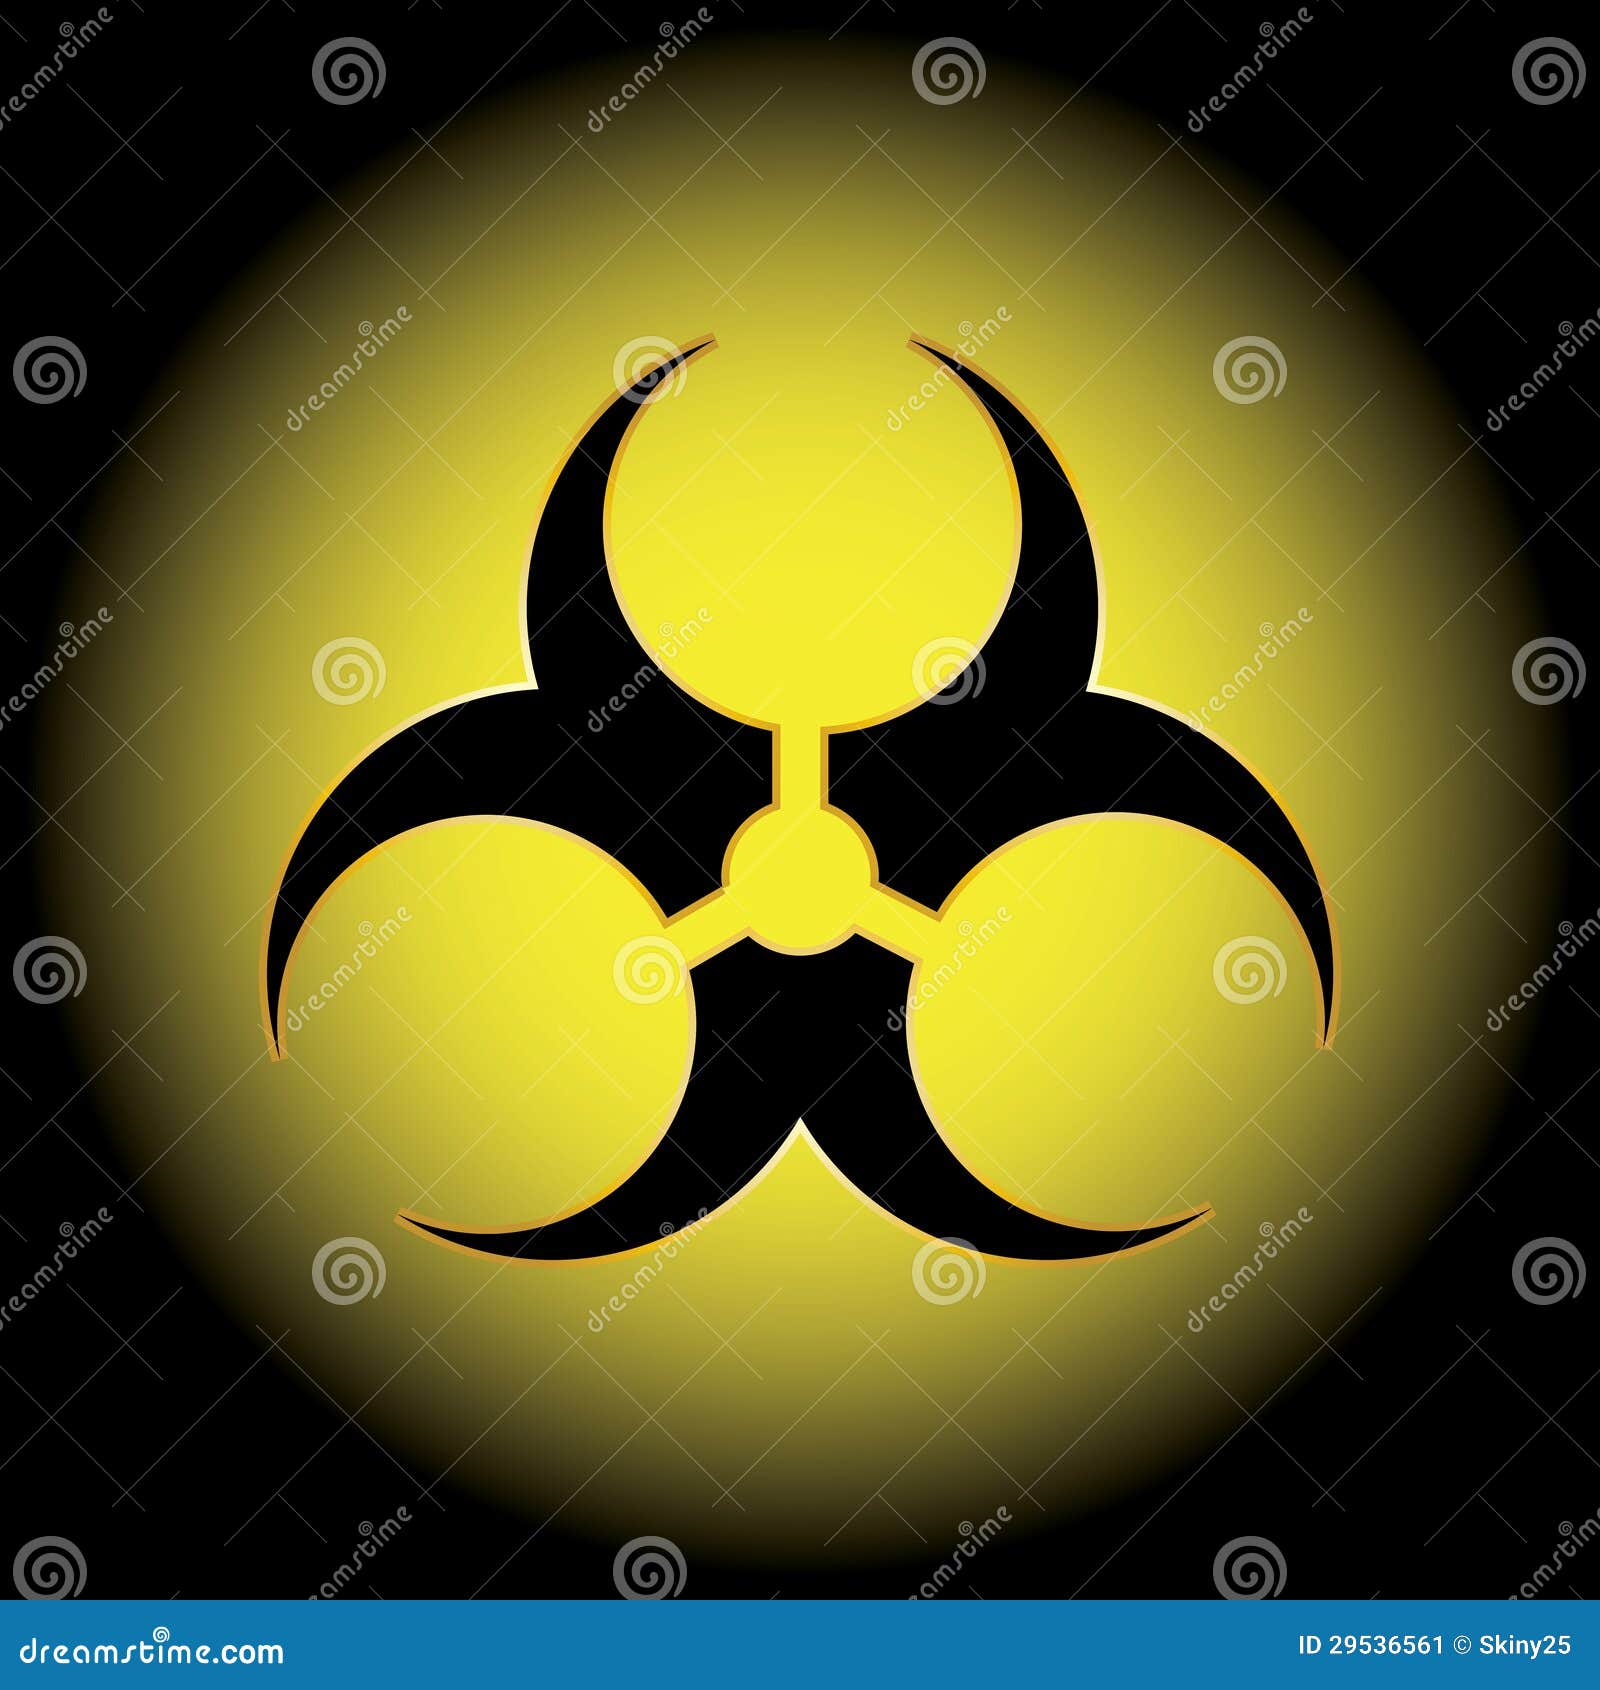 biohazard-official-symbol-vector-stock-image-image-29536561